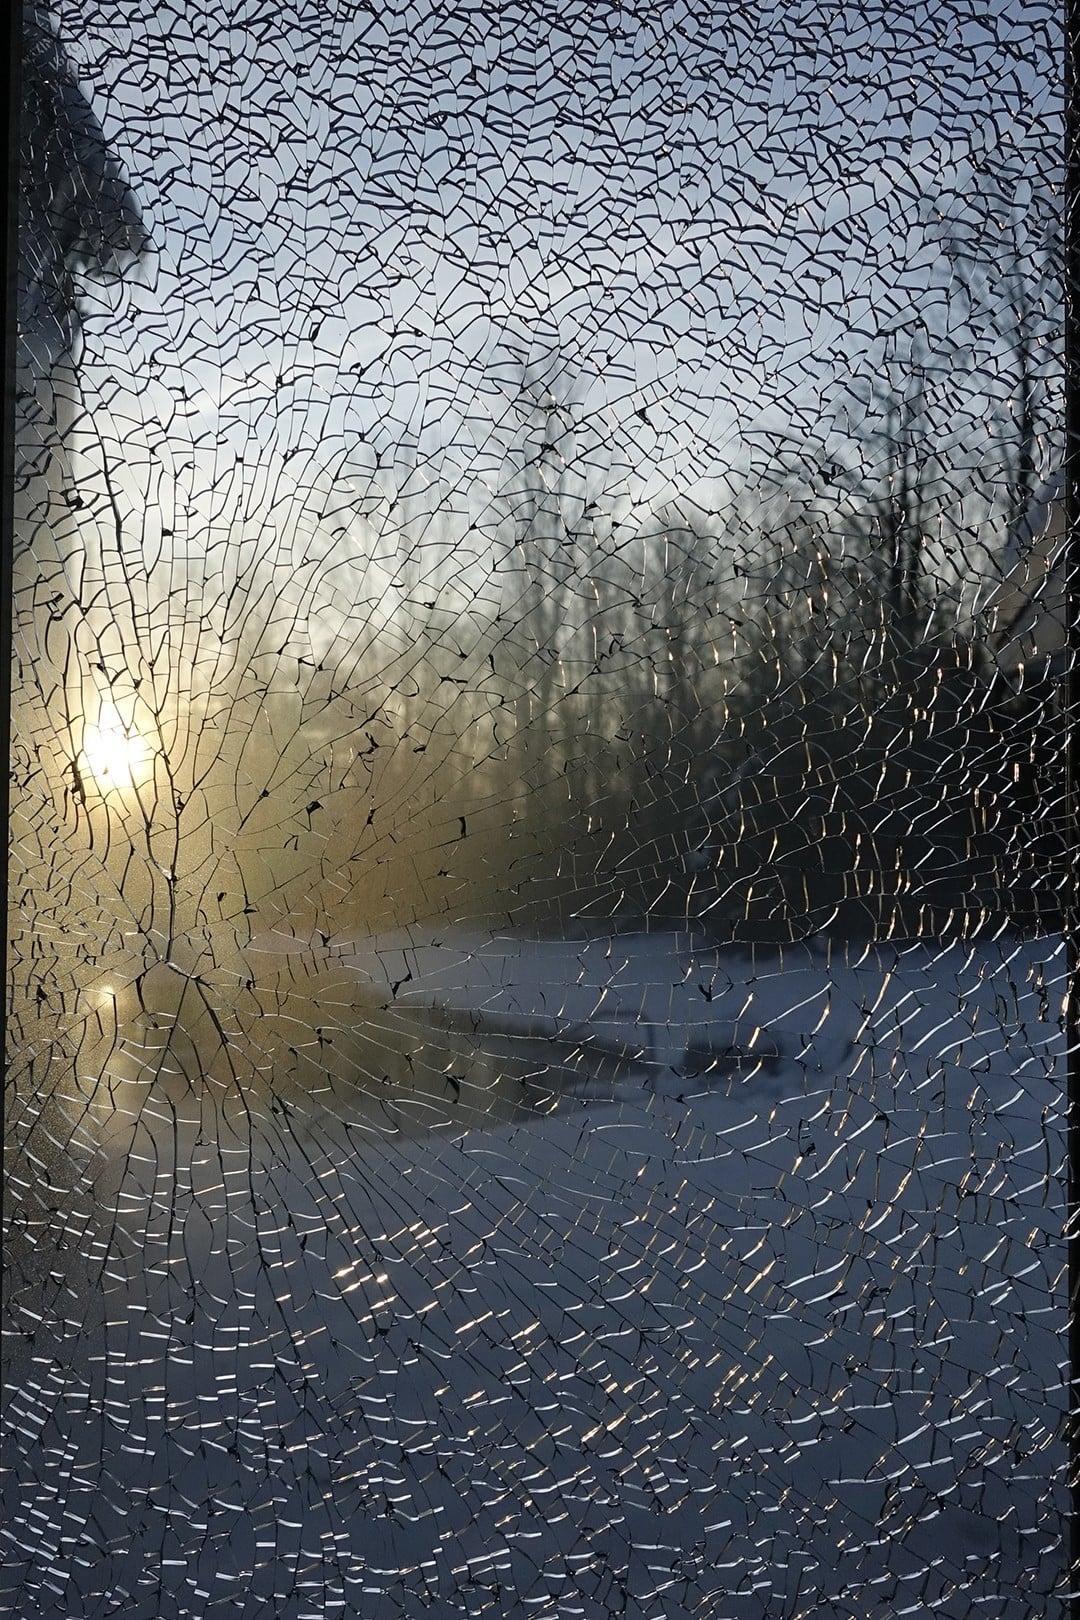 Robin Botie of Ithaca, New York, photographs ha sunrise through her shattered window. Broken but still beautiful.